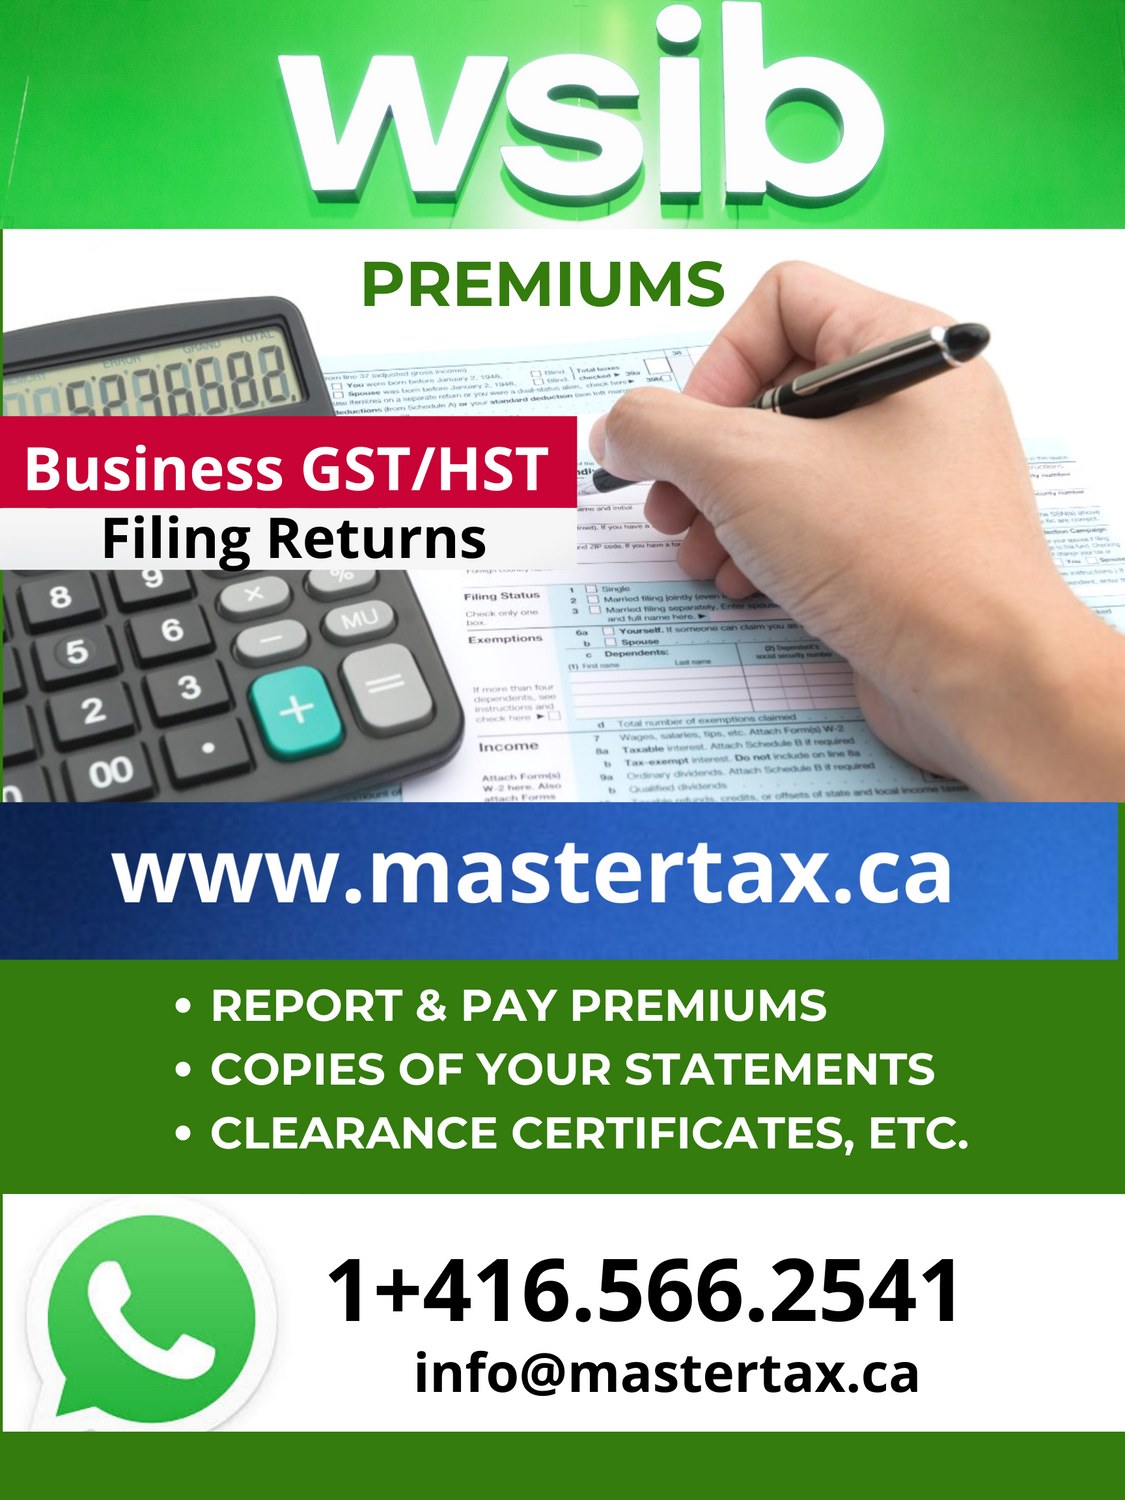 Mastertax Financial Services Inc